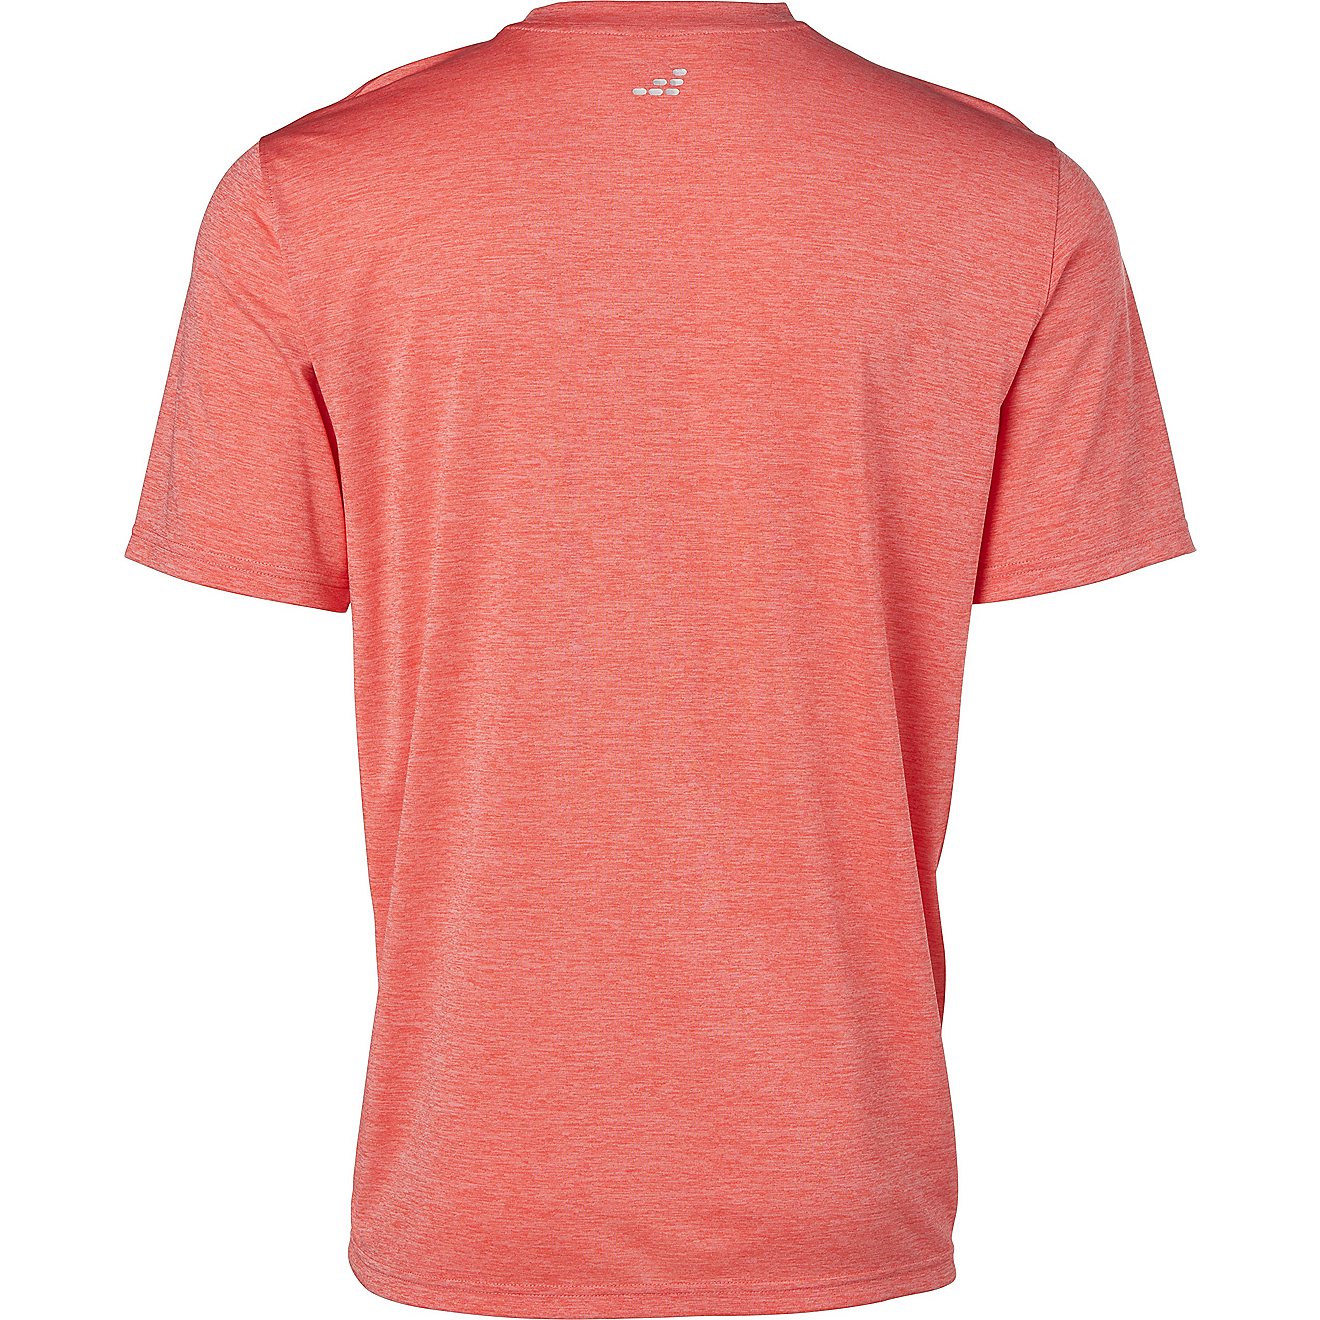 BCG Men's Turbo Melange T-shirt                                                                                                  - view number 2